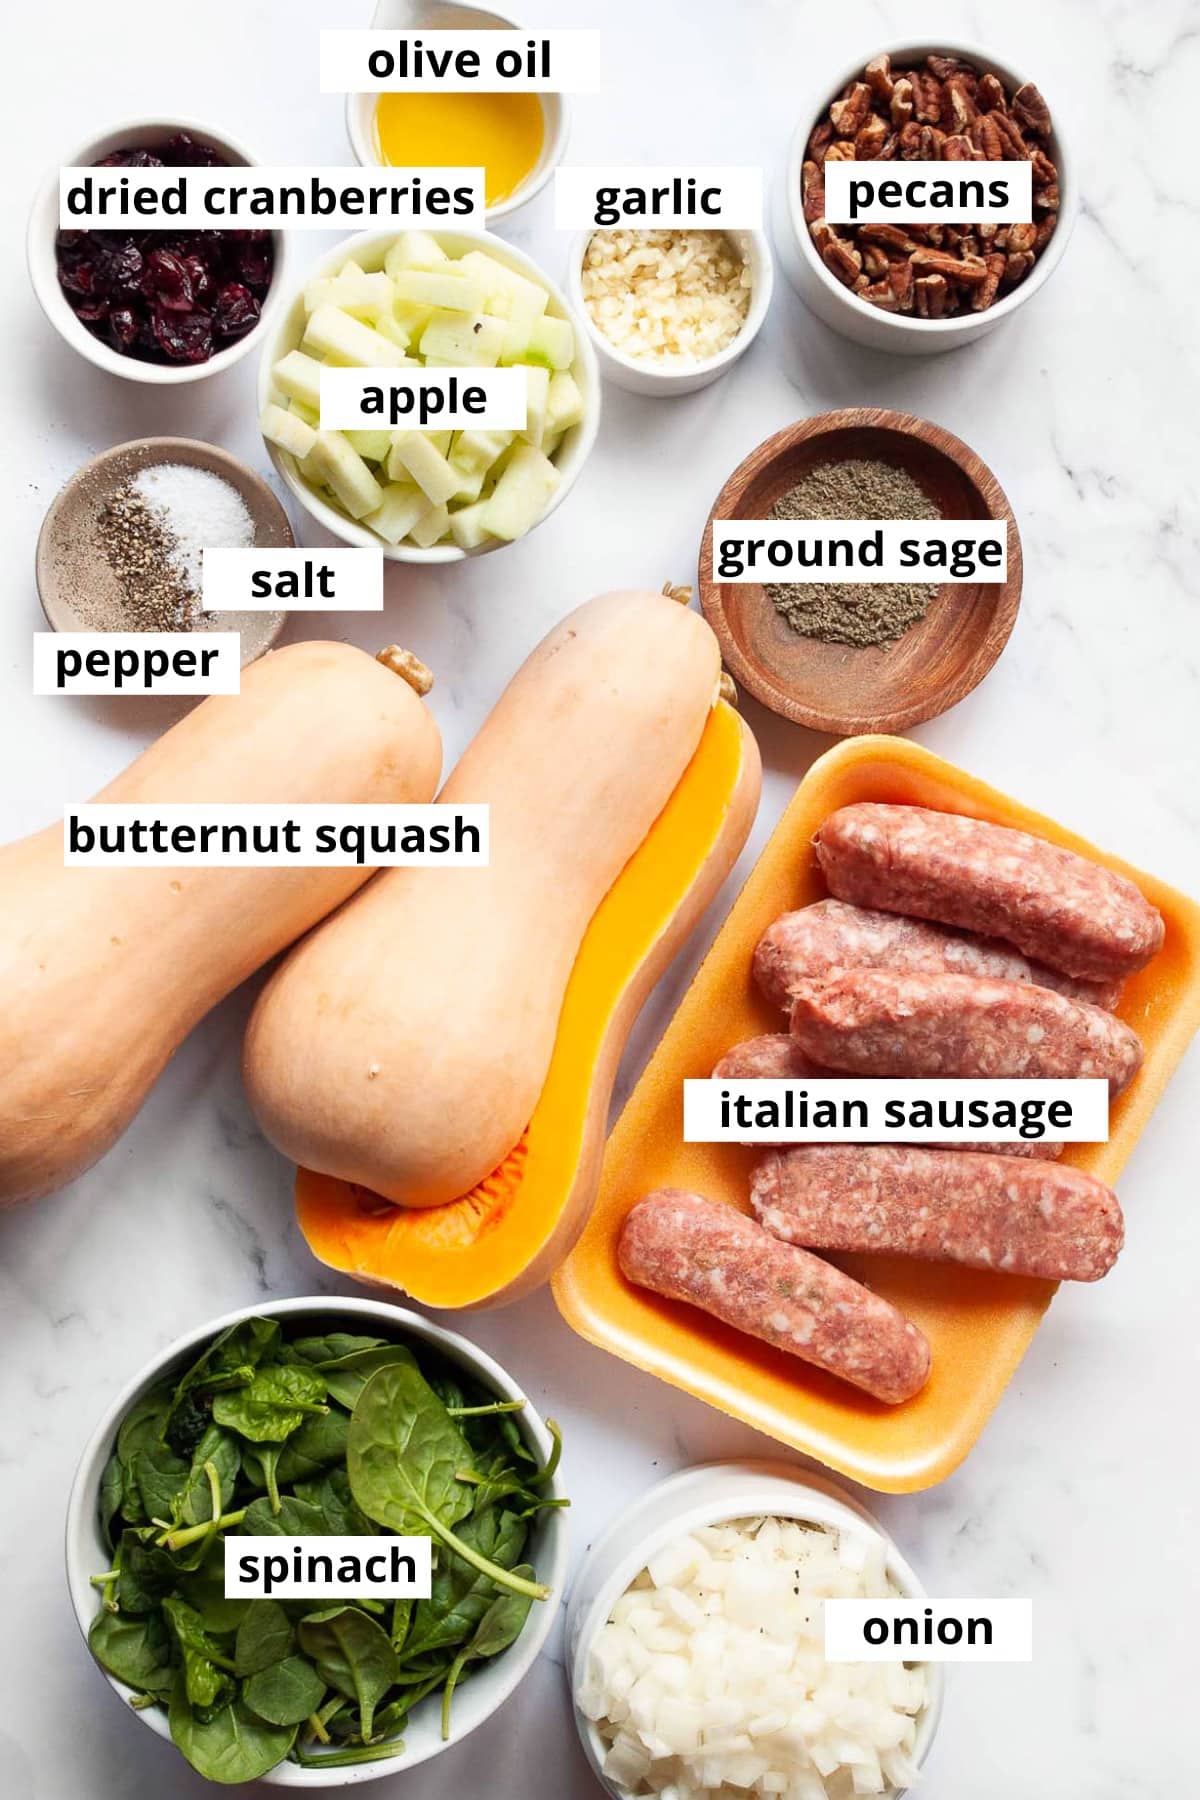 Butternut squash, Italian sausage, apple, pecans, dried cranberries, olive oil, garlic, ground sage, salt, pepper, spinach, onion.